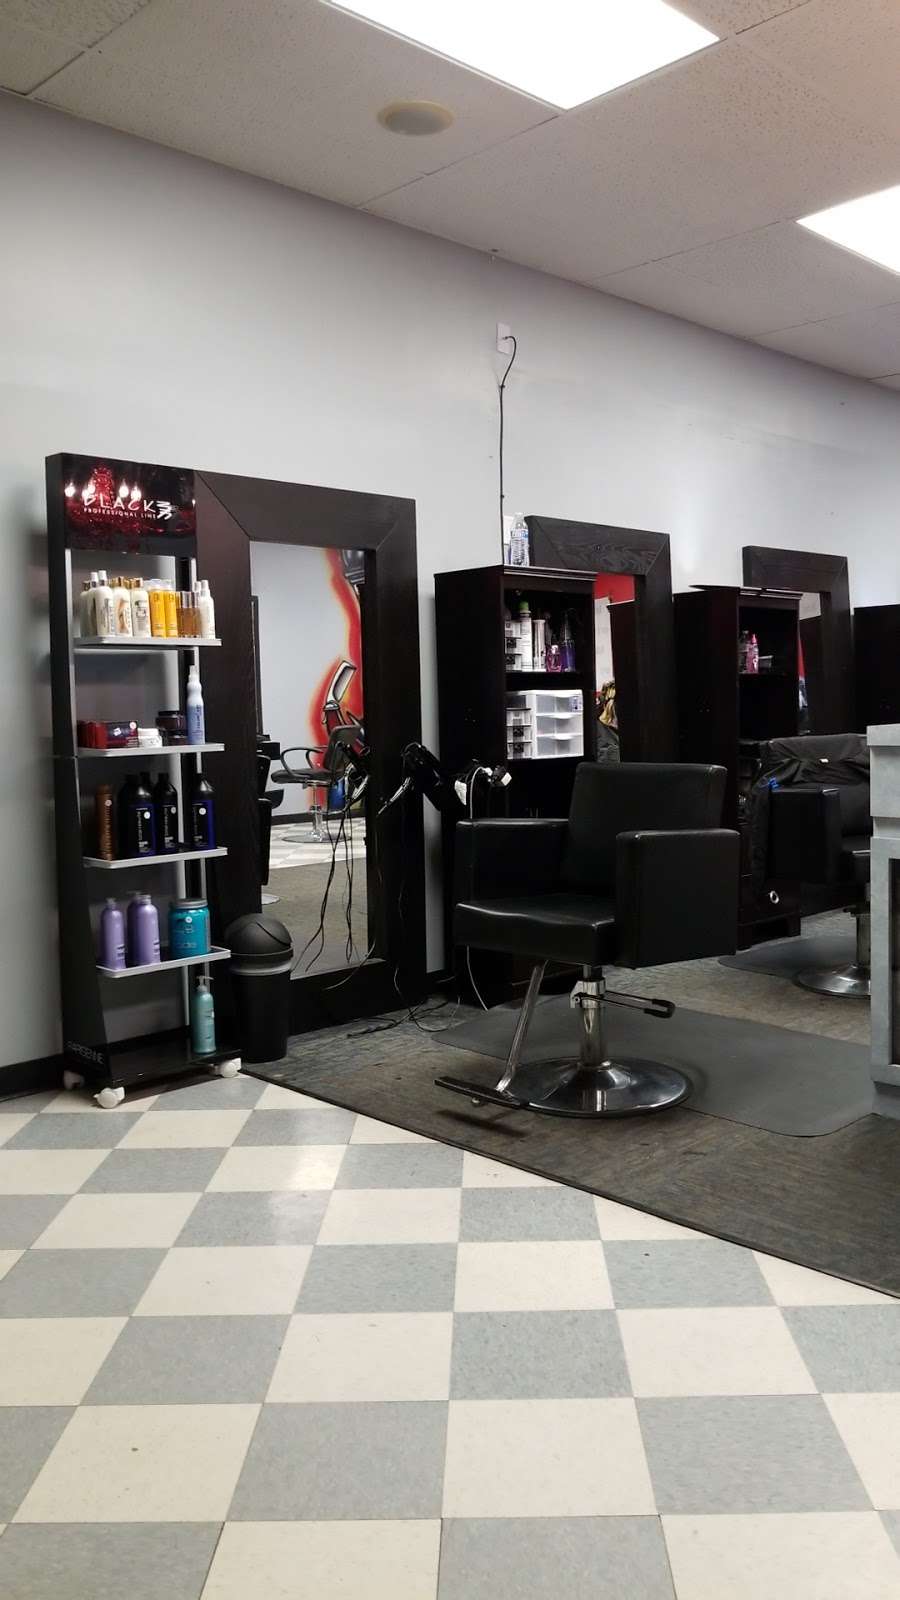 Rubens Hair Studio - Barberos y Estilistas | 3133 Peoria St unit 205, Aurora, CO 80010, USA | Phone: (720) 638-0764